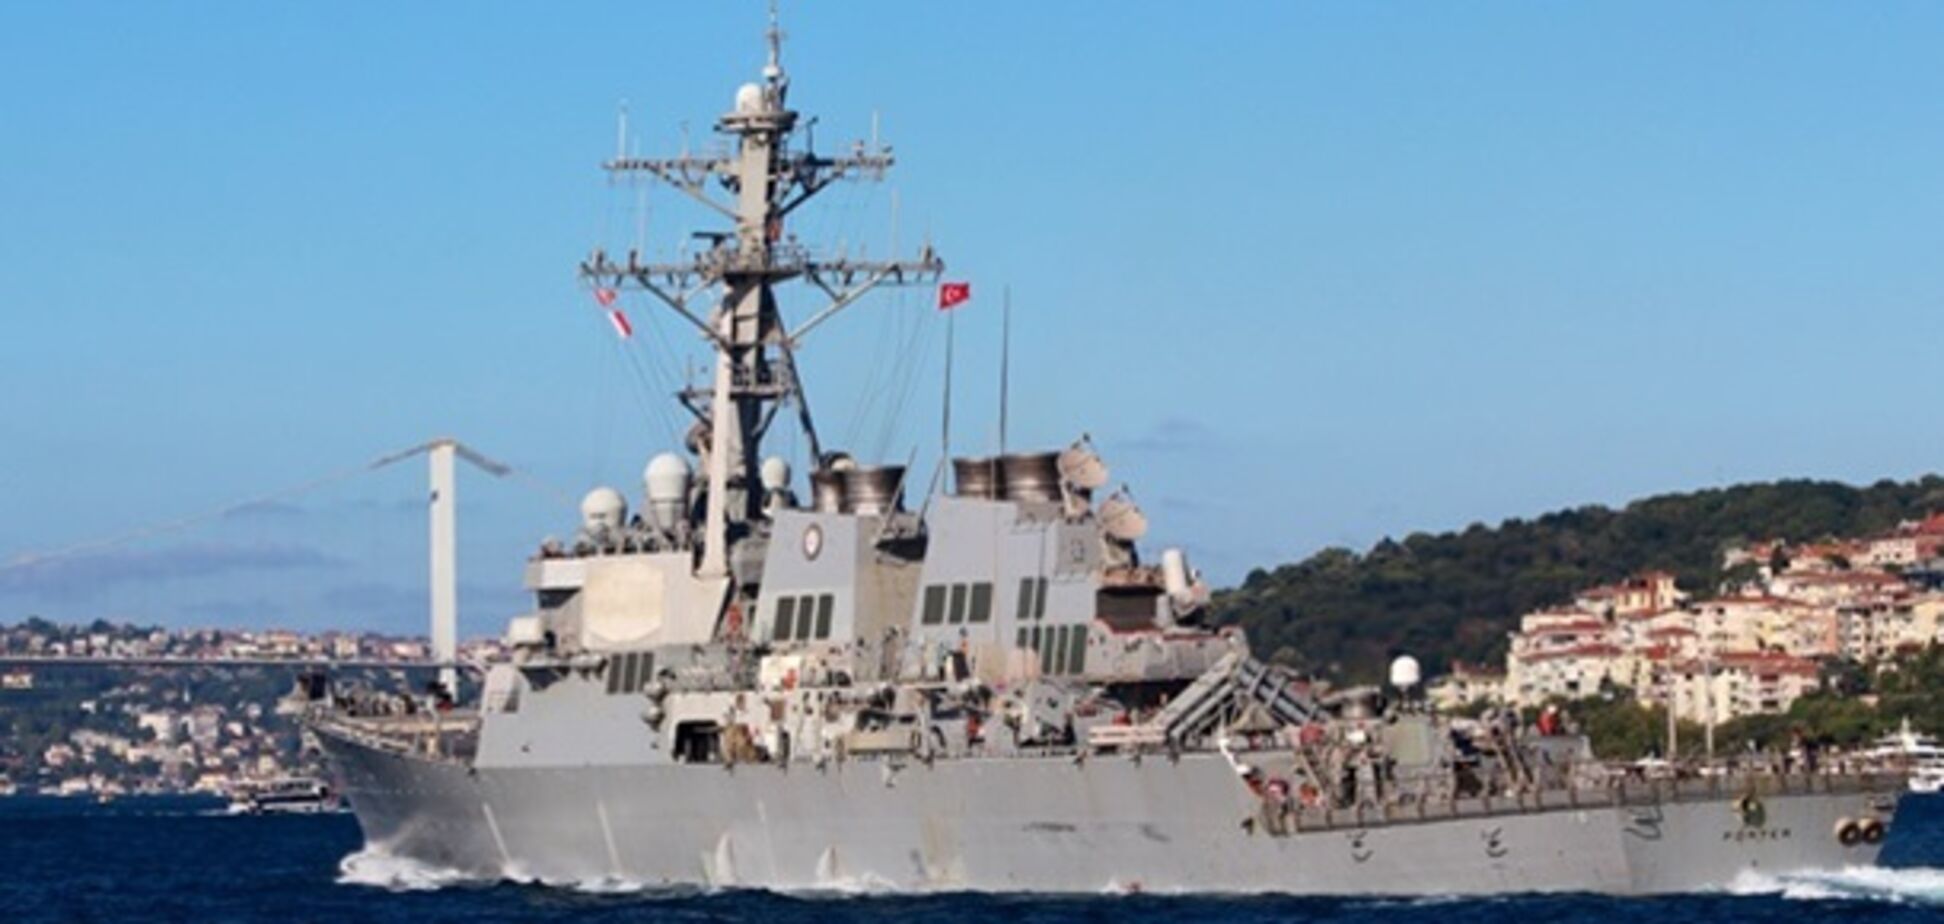 Бойовий корабель США зайшов у Чорне море